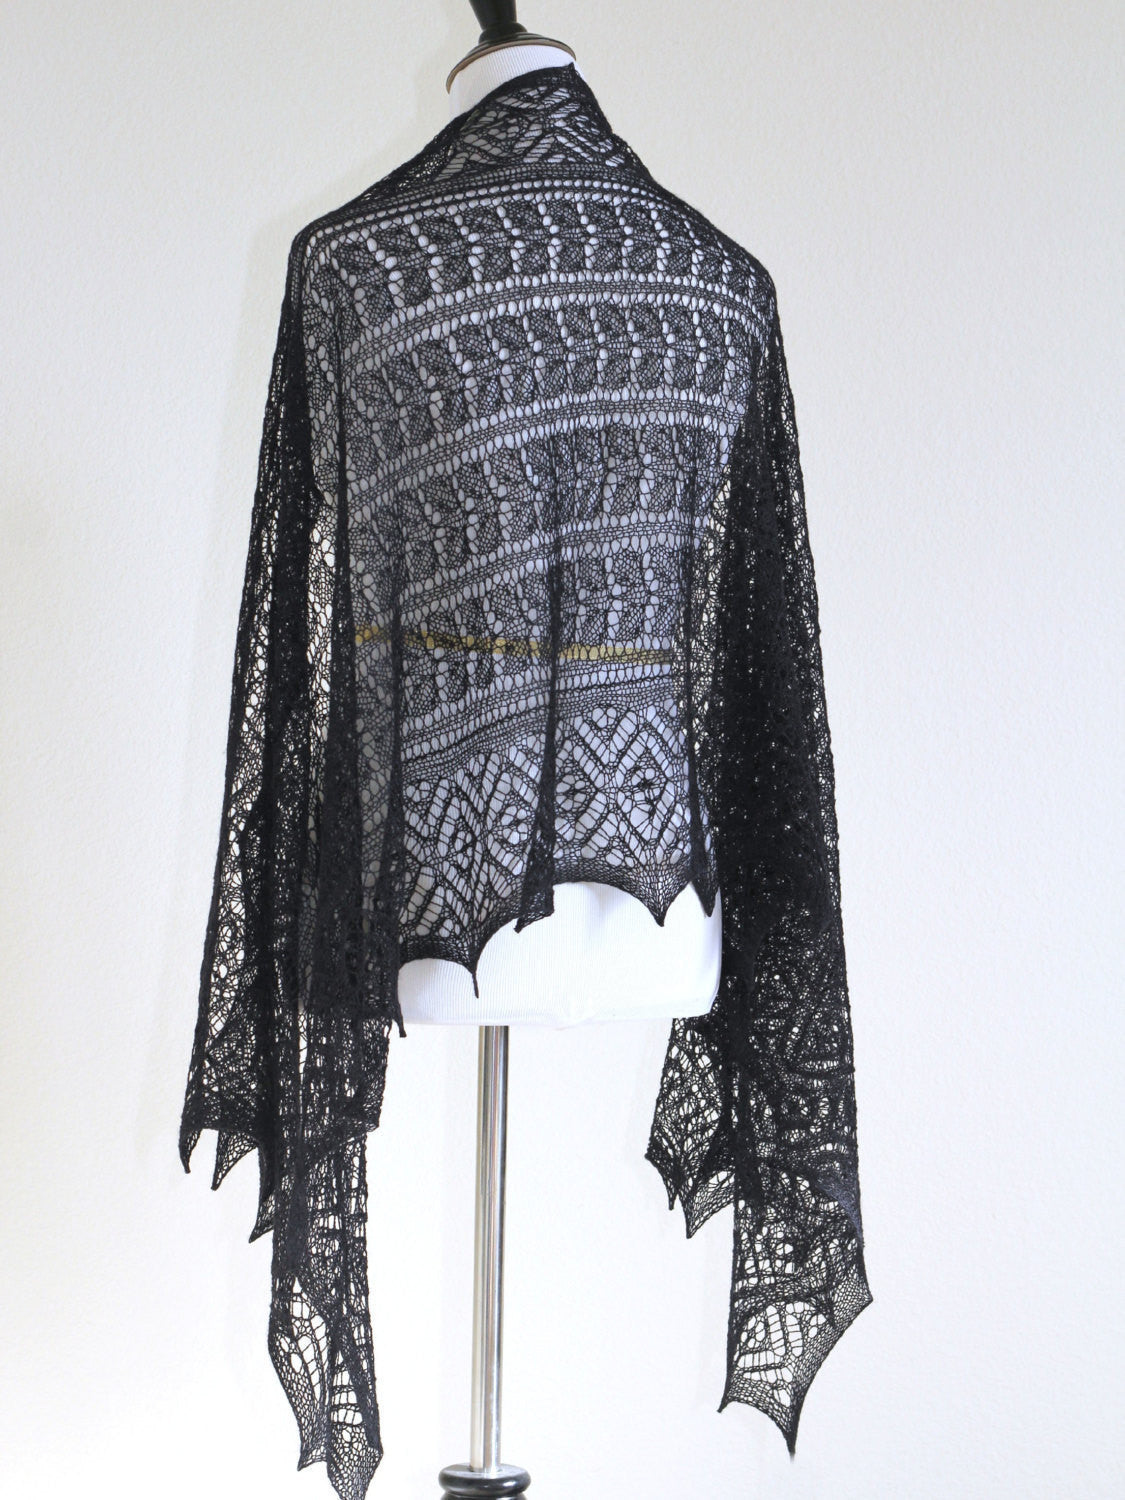 Black lace shawl